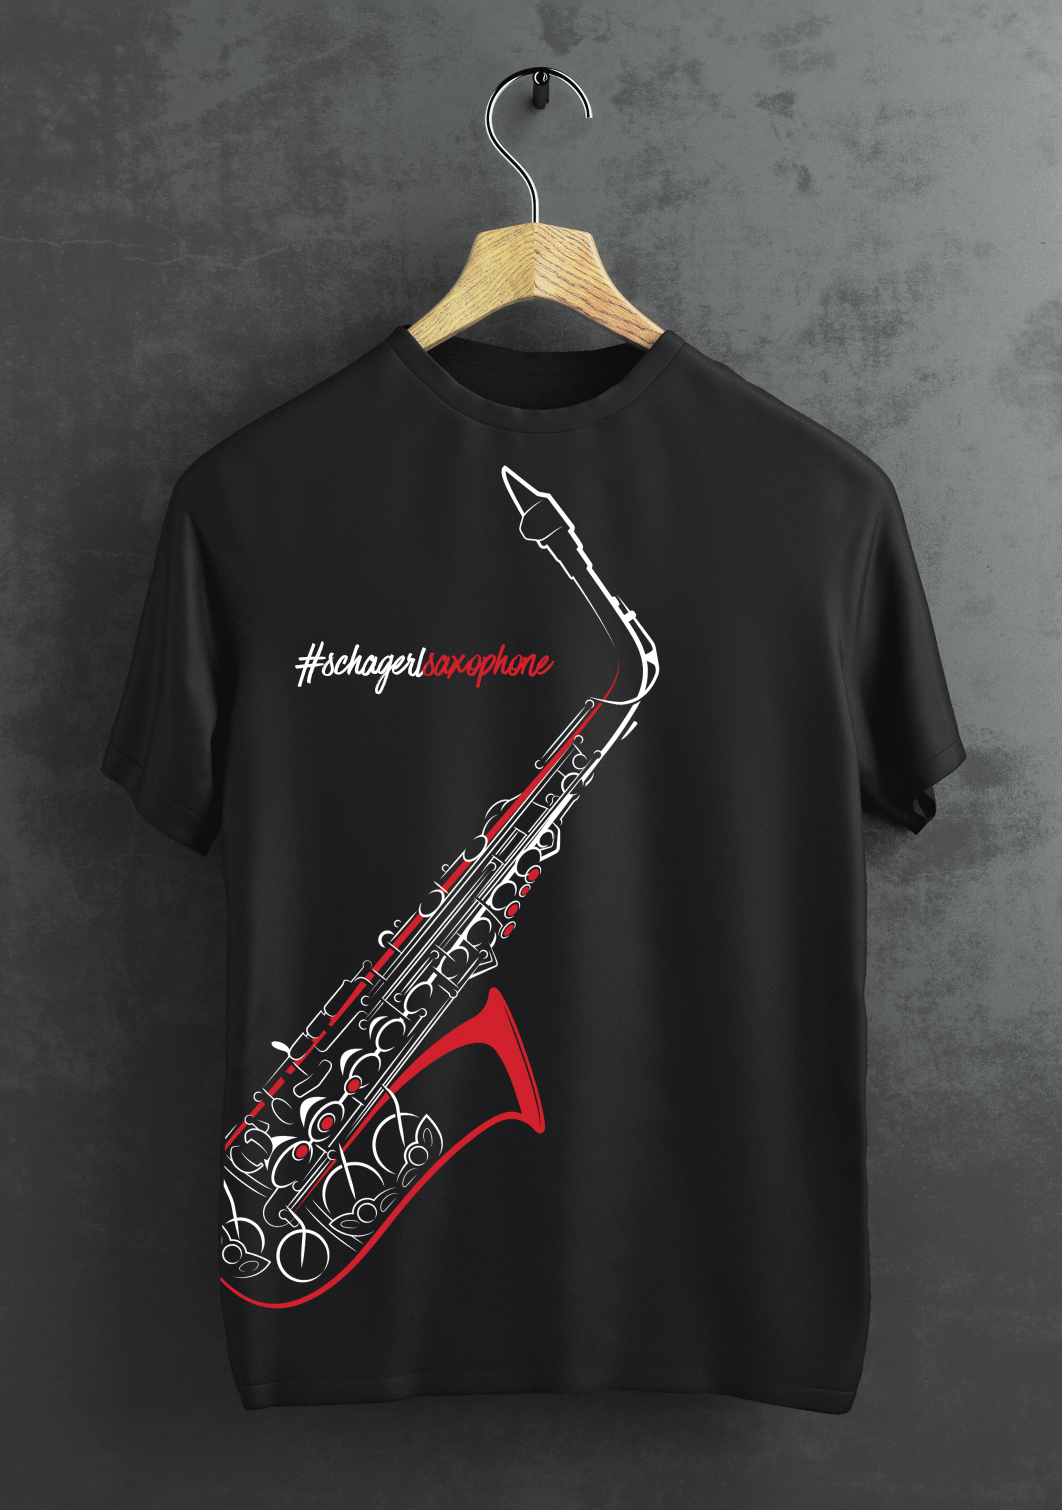 Schagerl T-Shirt Saxophon - black - Kids Size 152